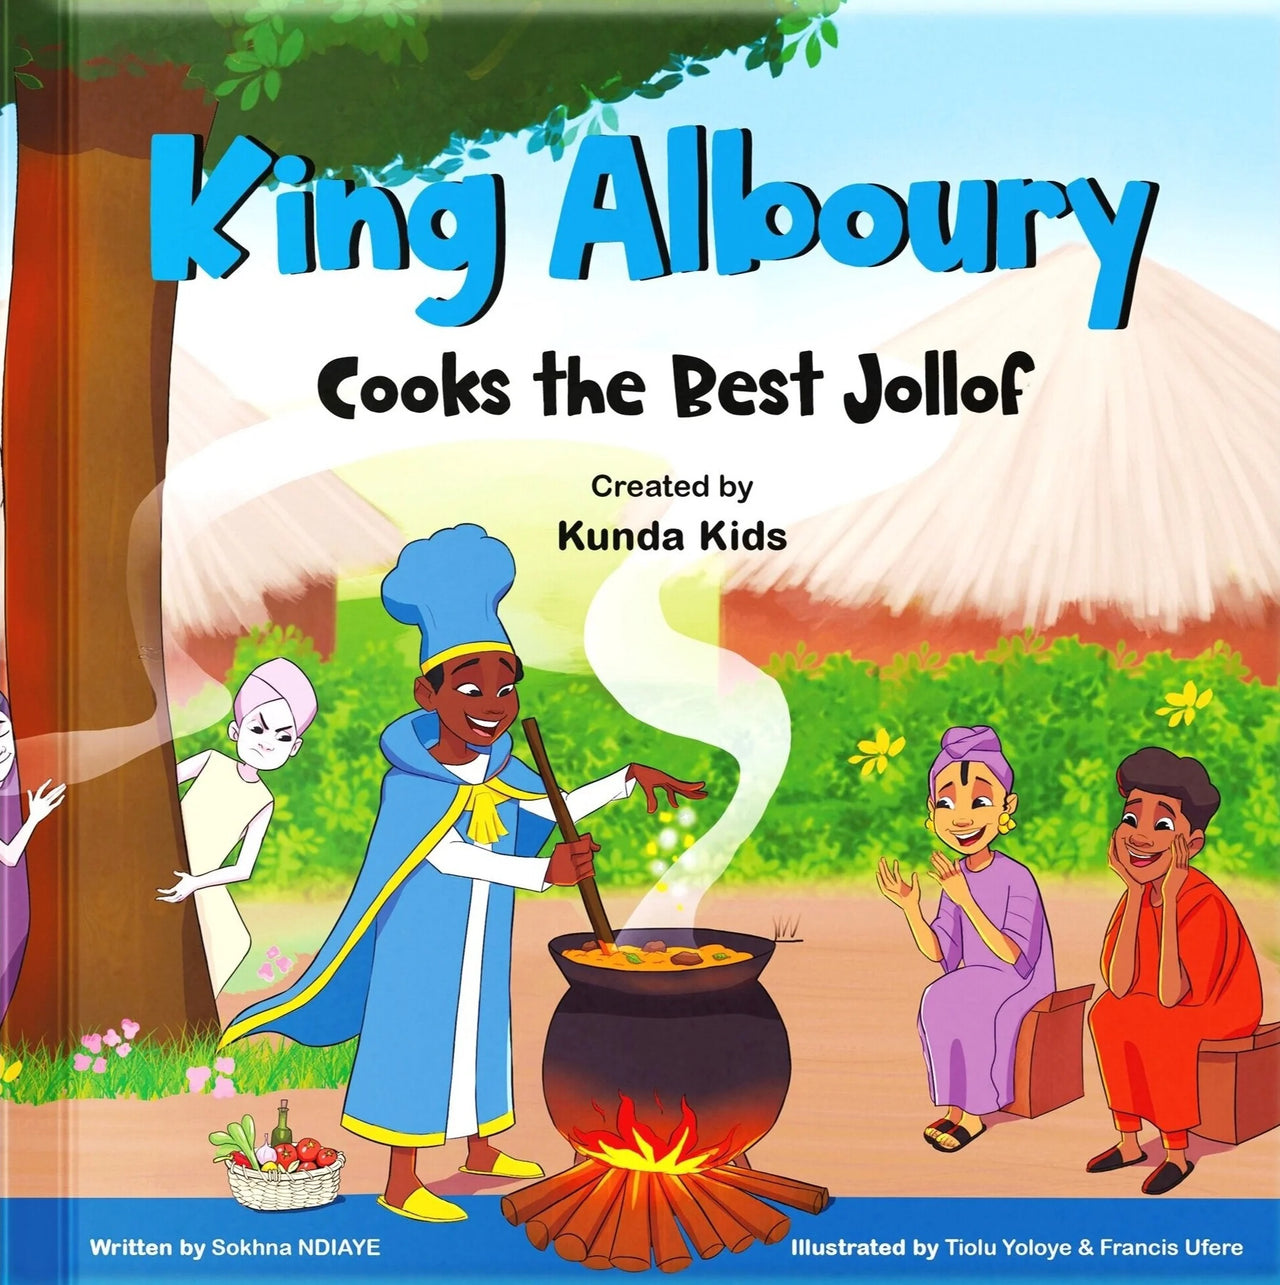 King Alboury Cooks the Best Jollof by Sokhna Ndiaye